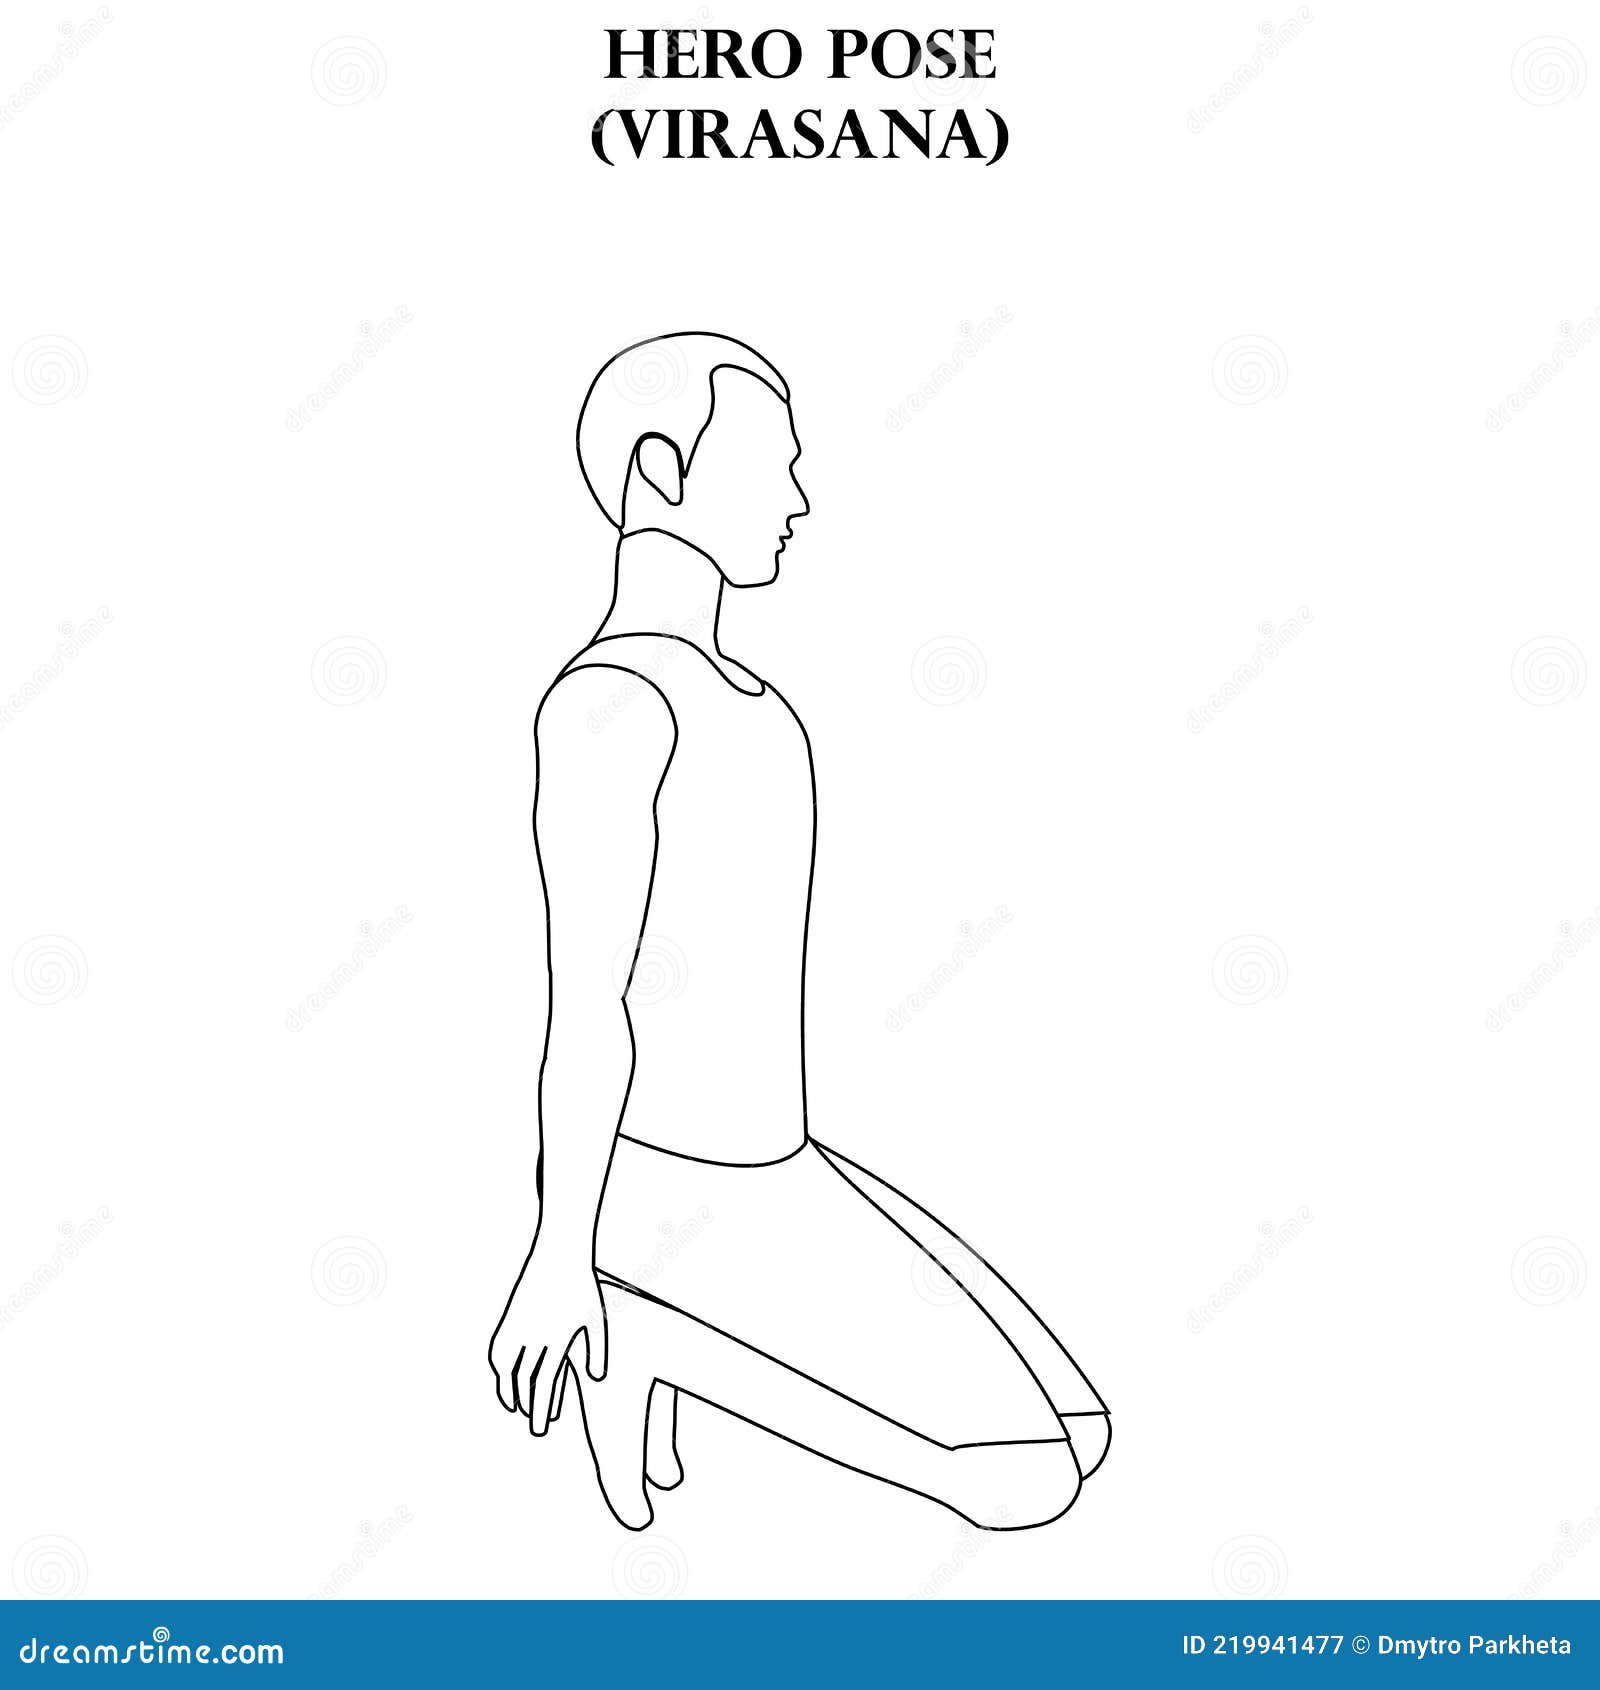 Vajrasana – Thunderbolt Pose & Virasana – Hero Pose – The difference  between the 2 Asanas. | Yoga Awakening Africa